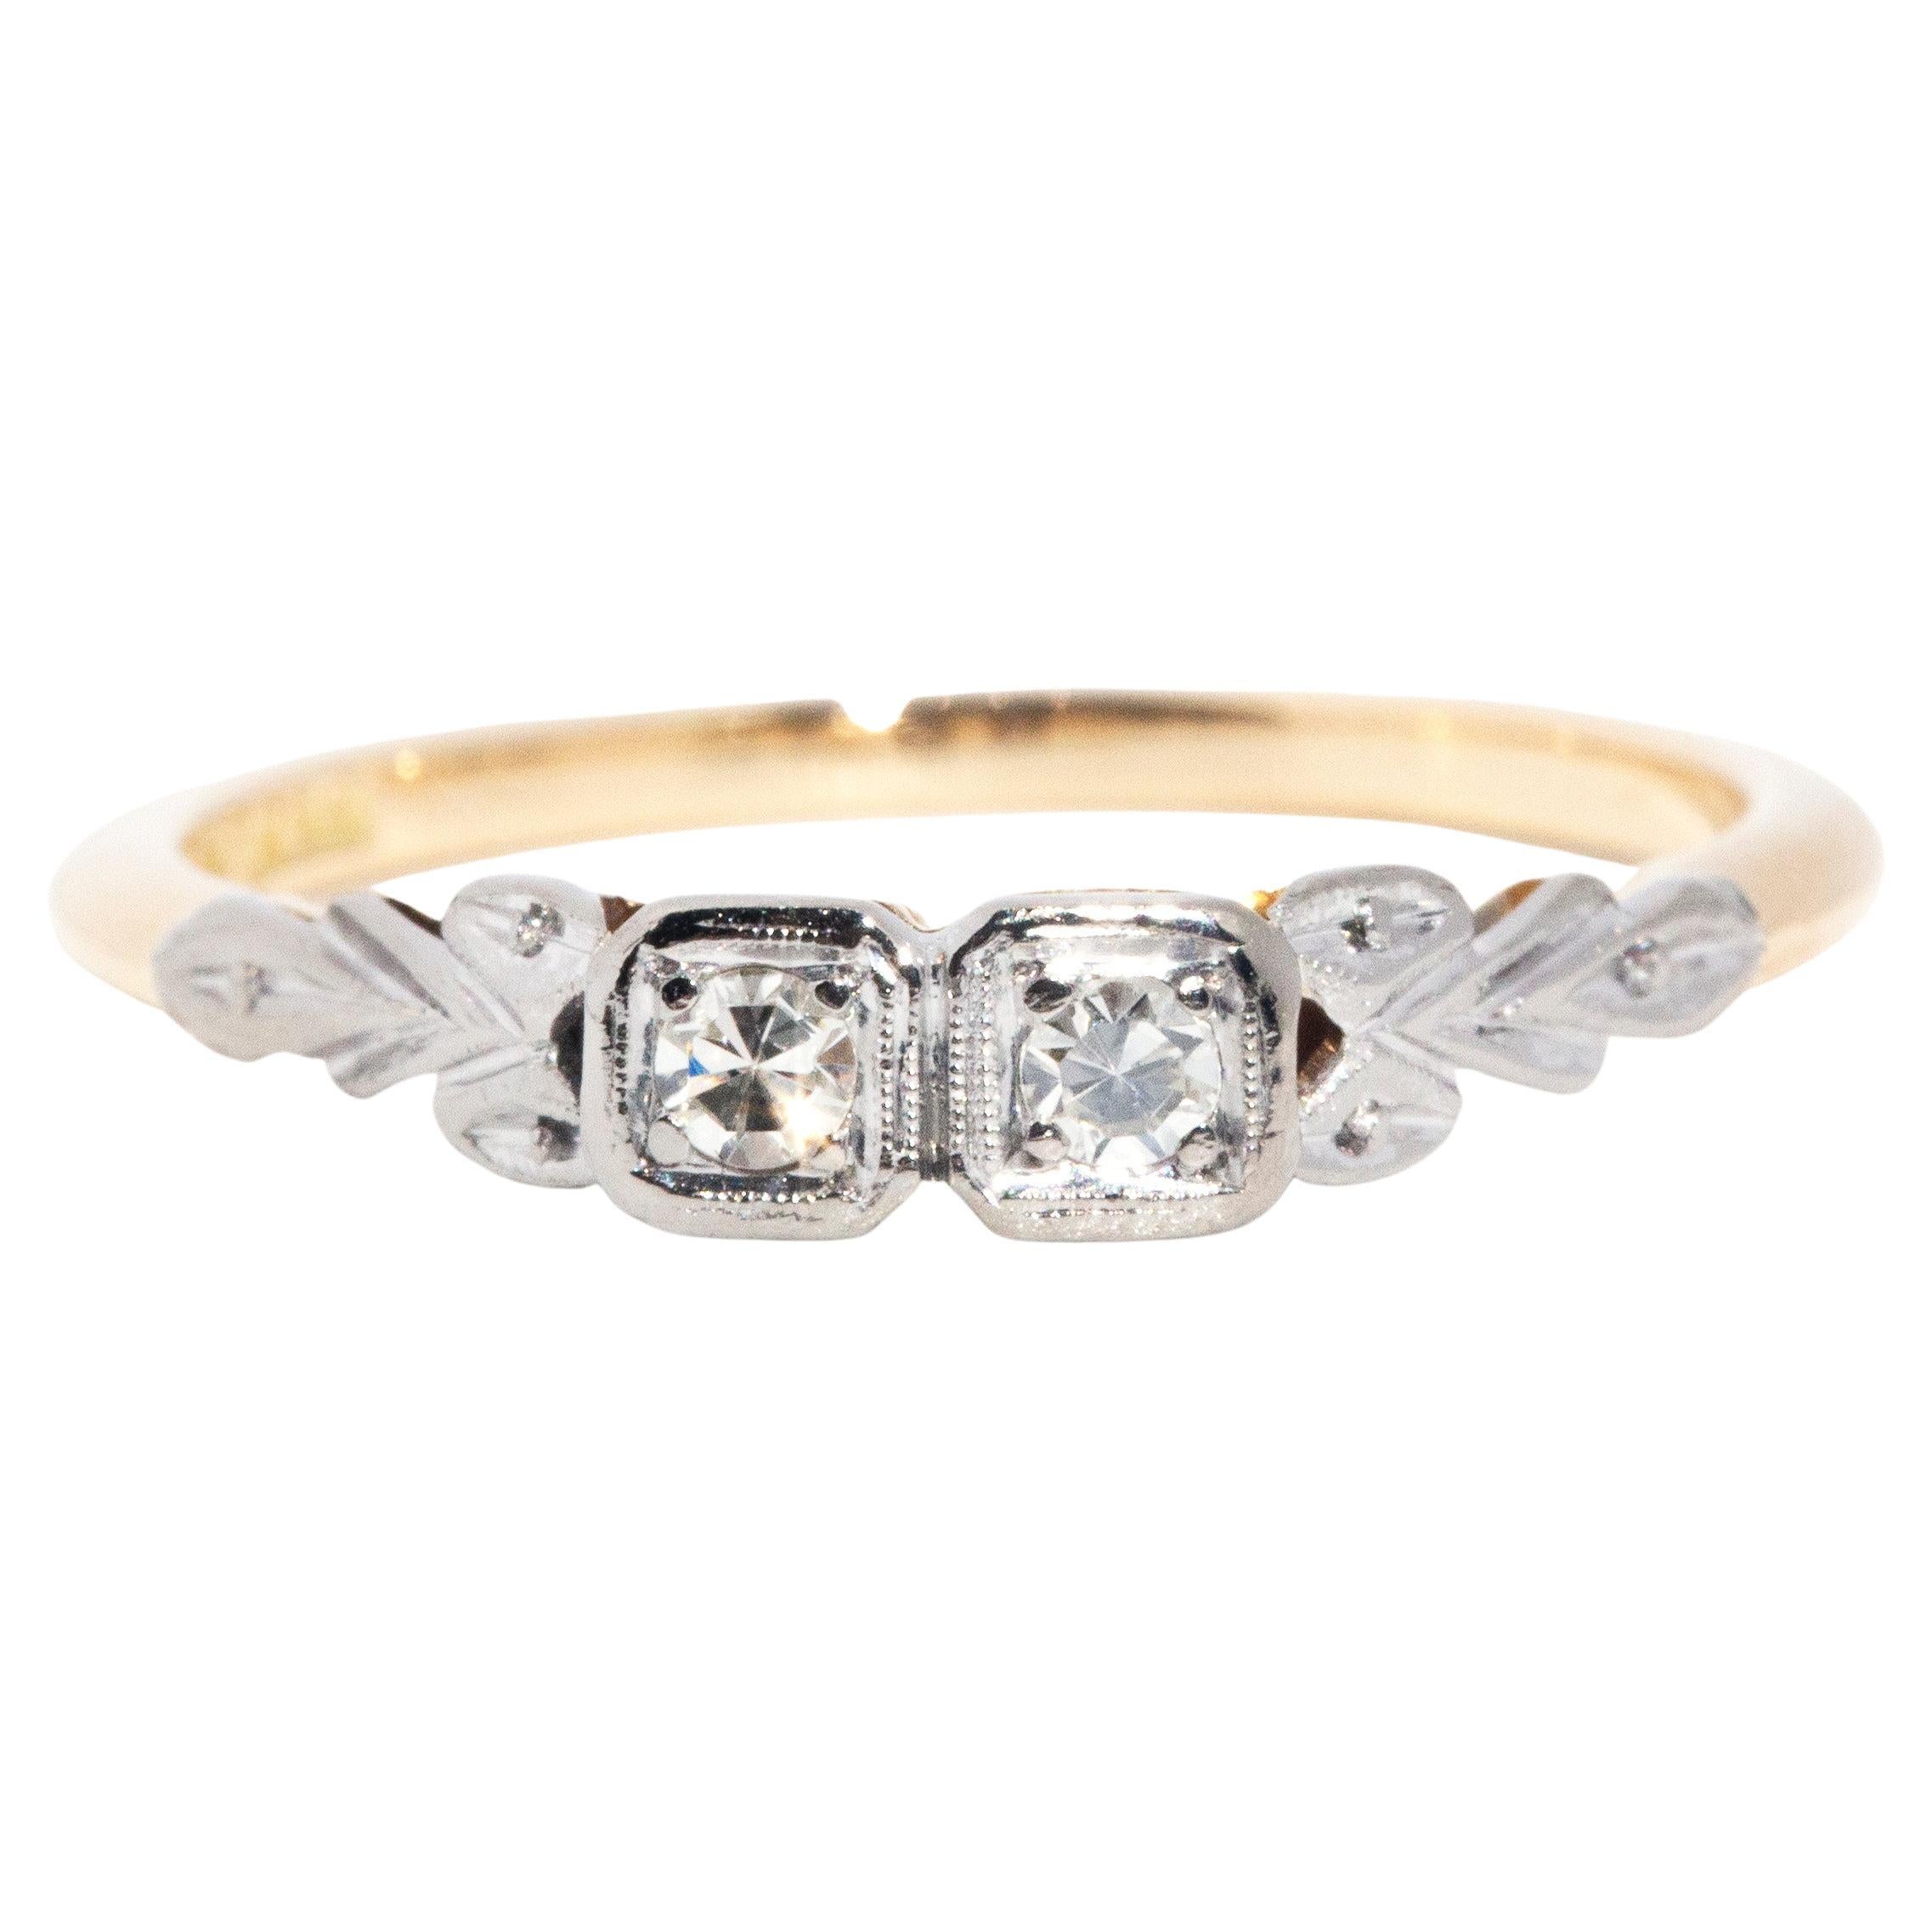 Circa 1950s, Diamond Vintage 18 Carat Yellow and White Gold Two Stone Ring